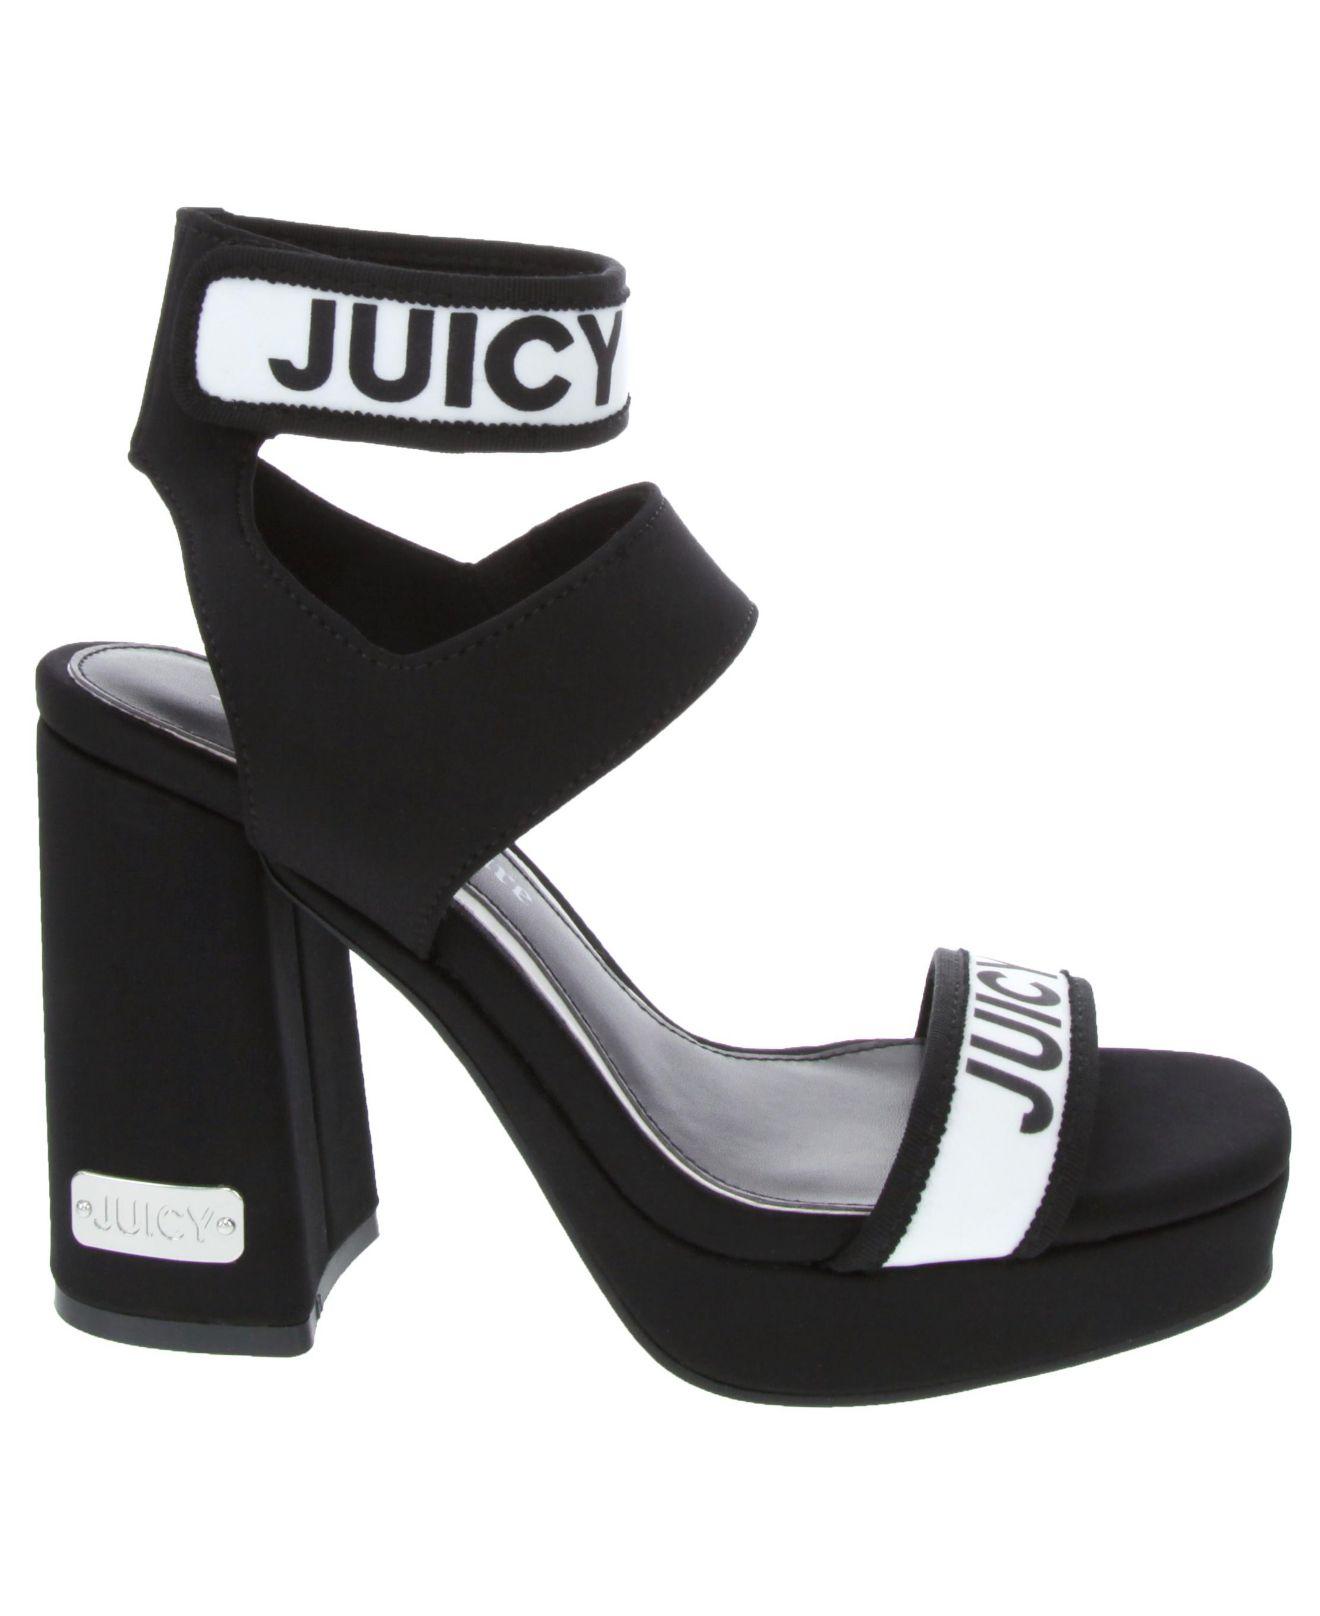 Juicy Couture Glisten Platform Heel Sandal in Black - Lyst